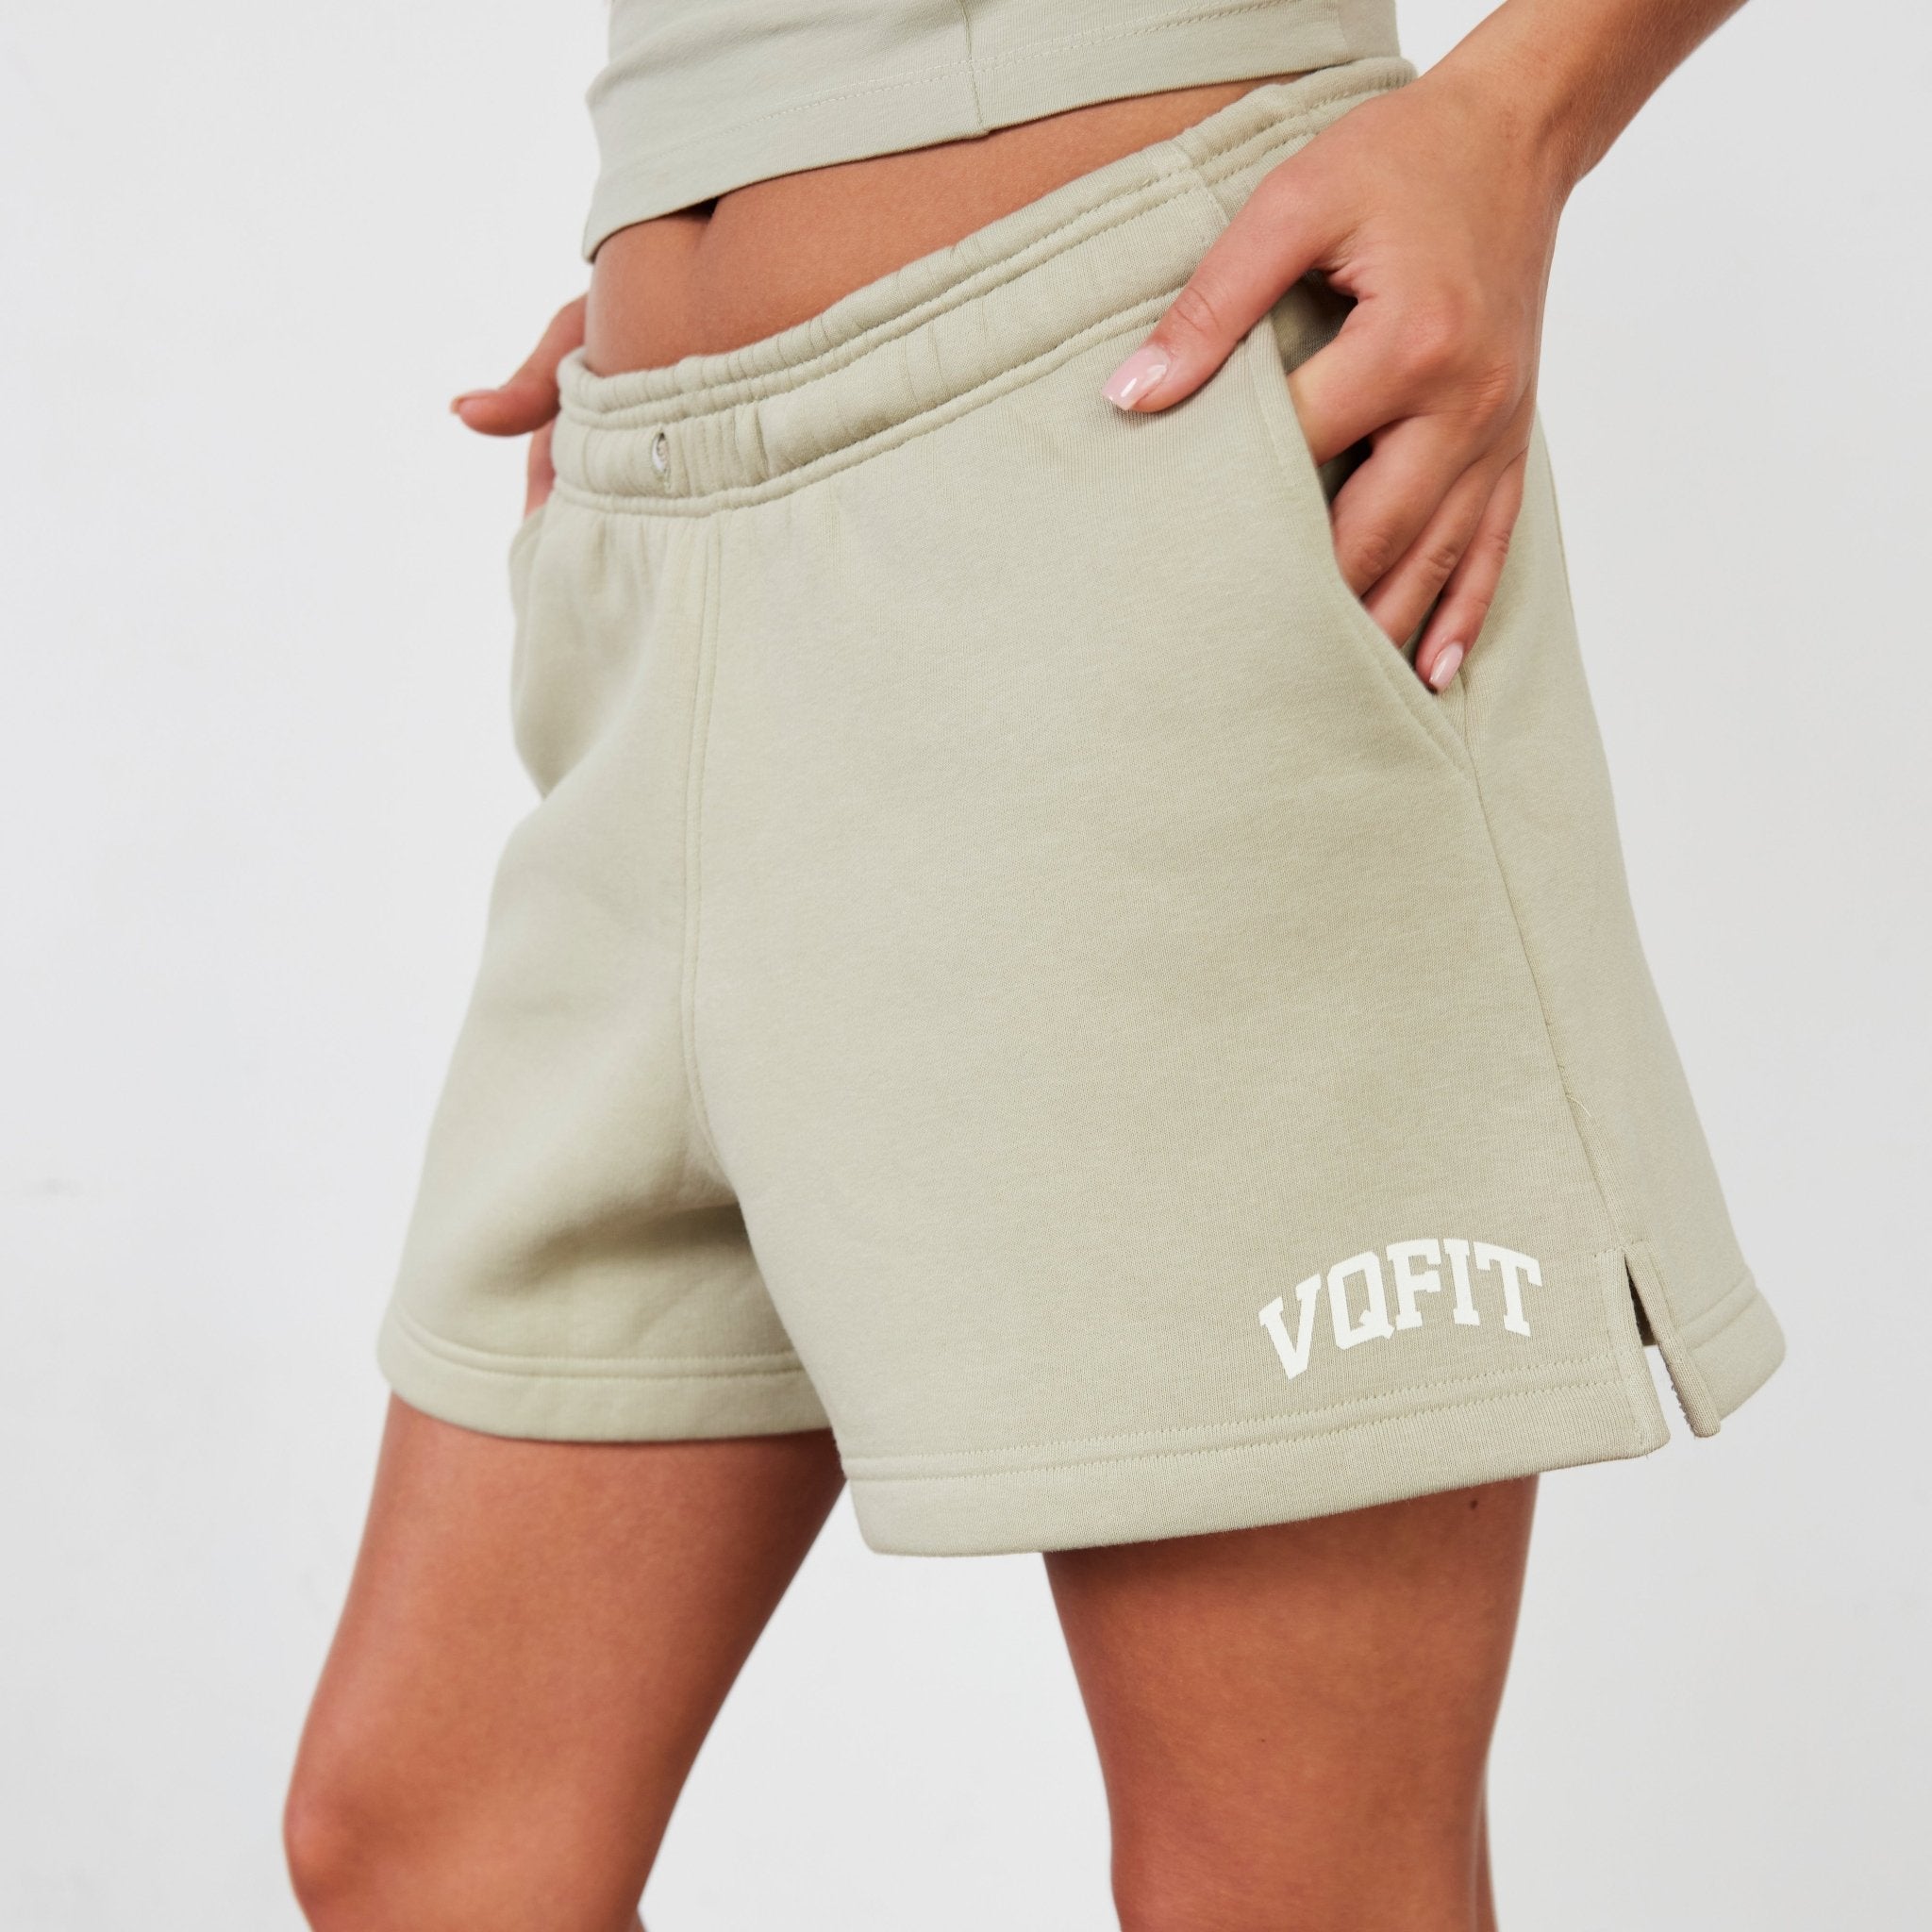 Vanquish Pale Khaki VQFIT Shorts - Vanquish Fitness